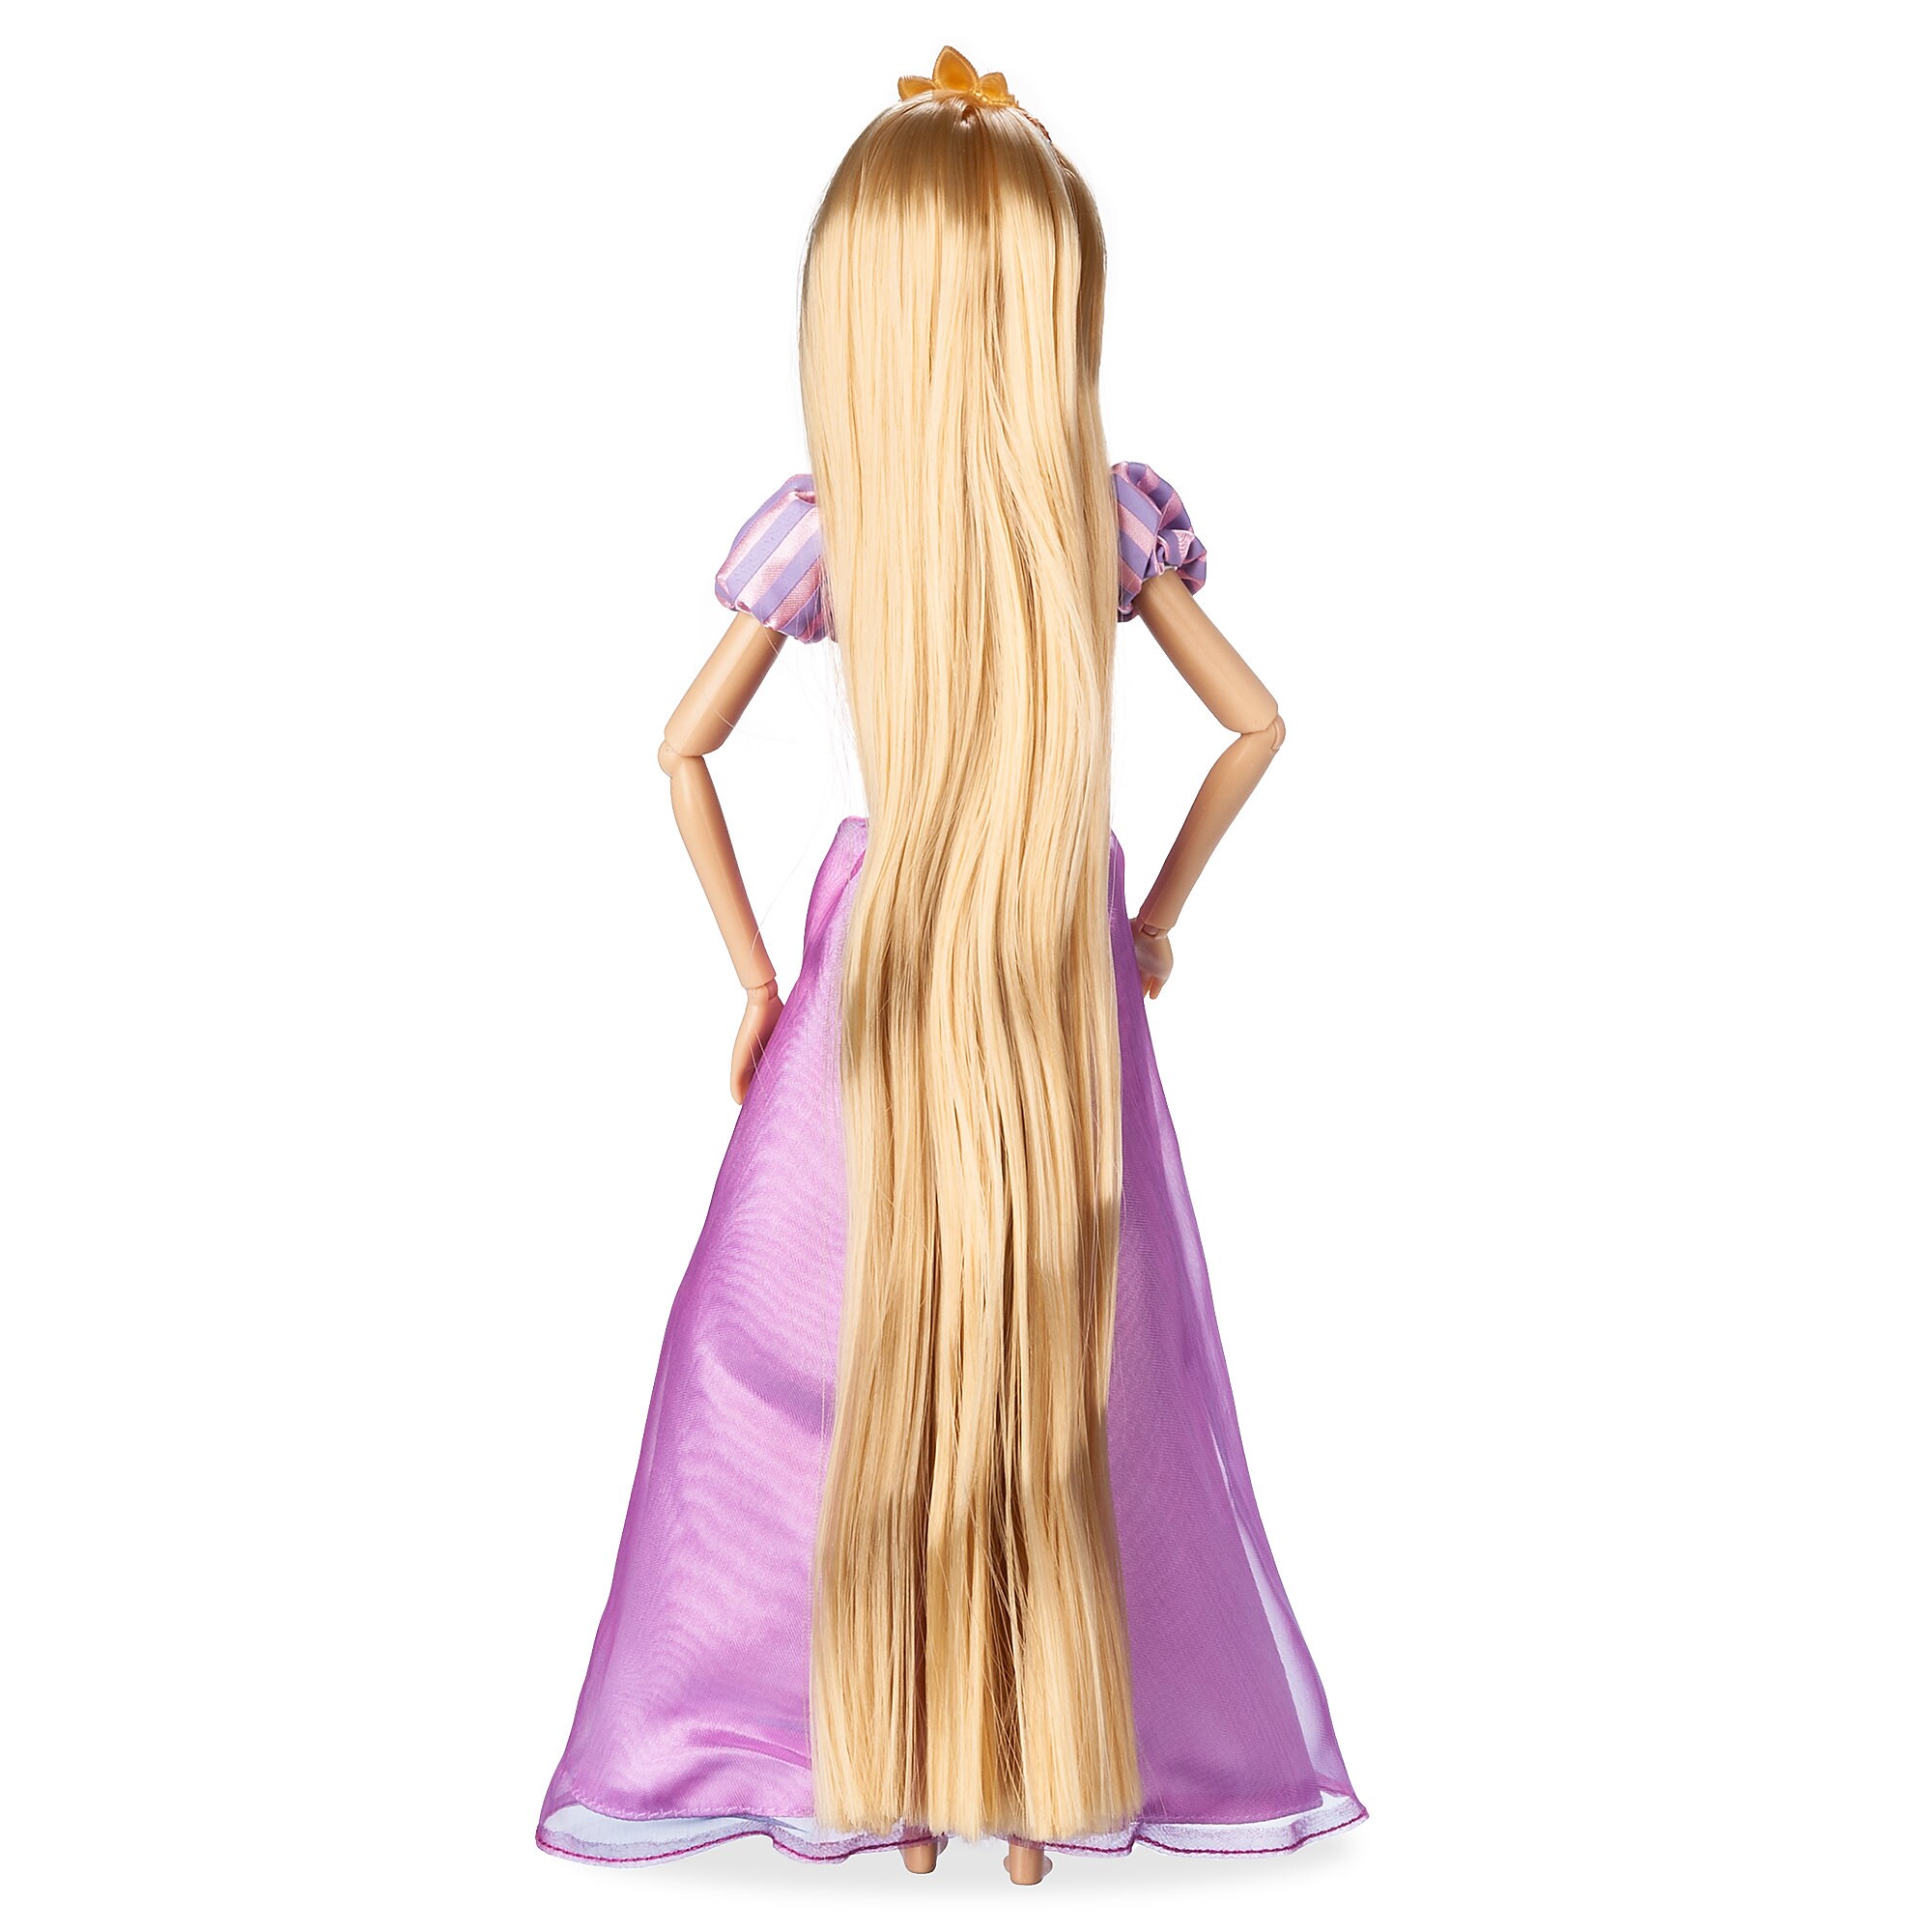 Rapunzel Hair Play Doll